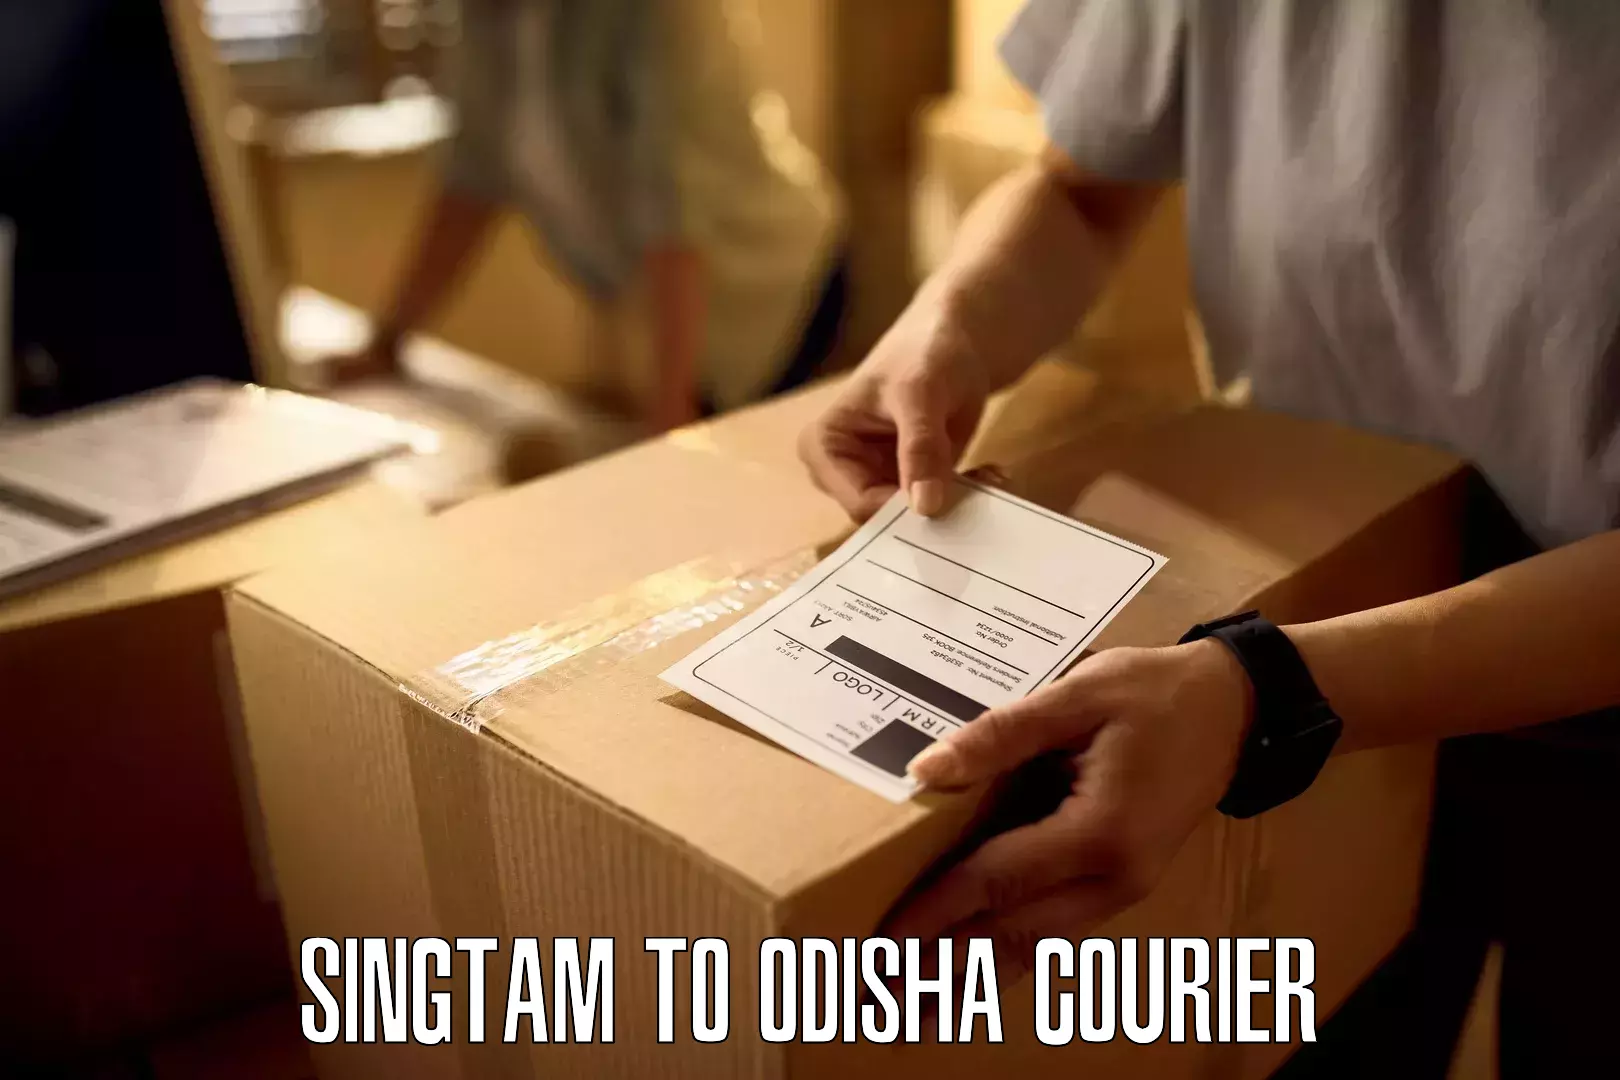 User-friendly courier app Singtam to Loisingha